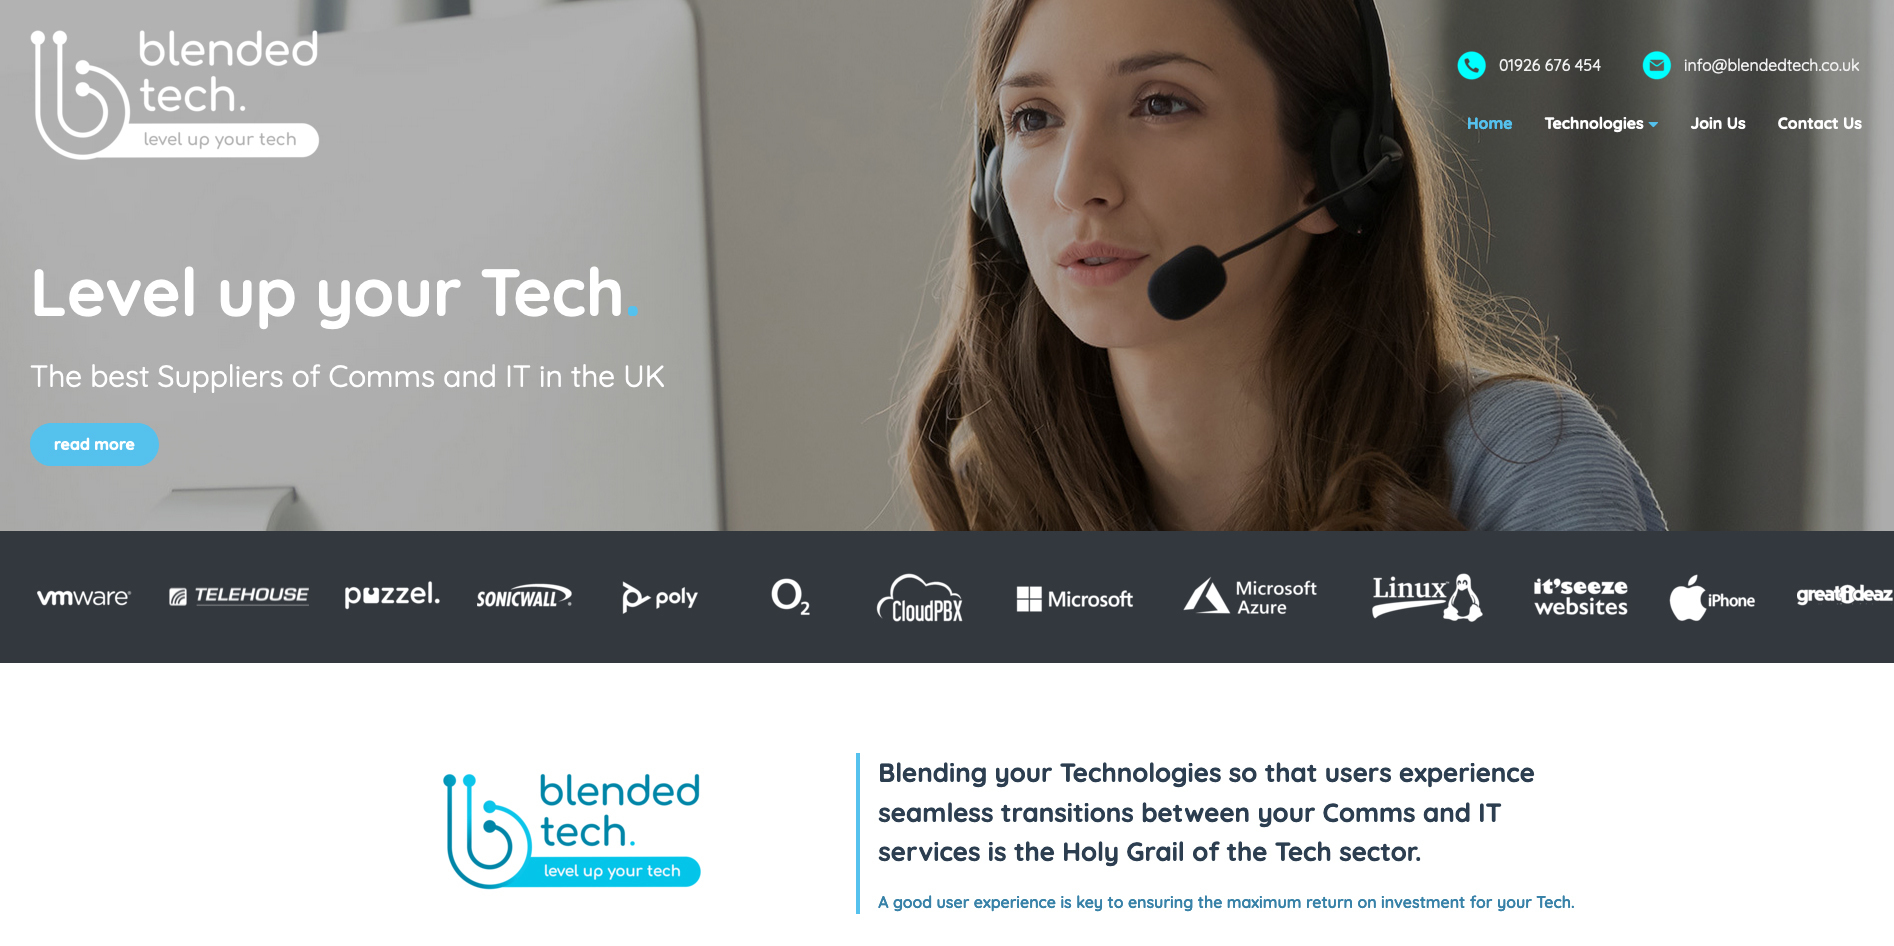 Blended Tech website design by it'seeze